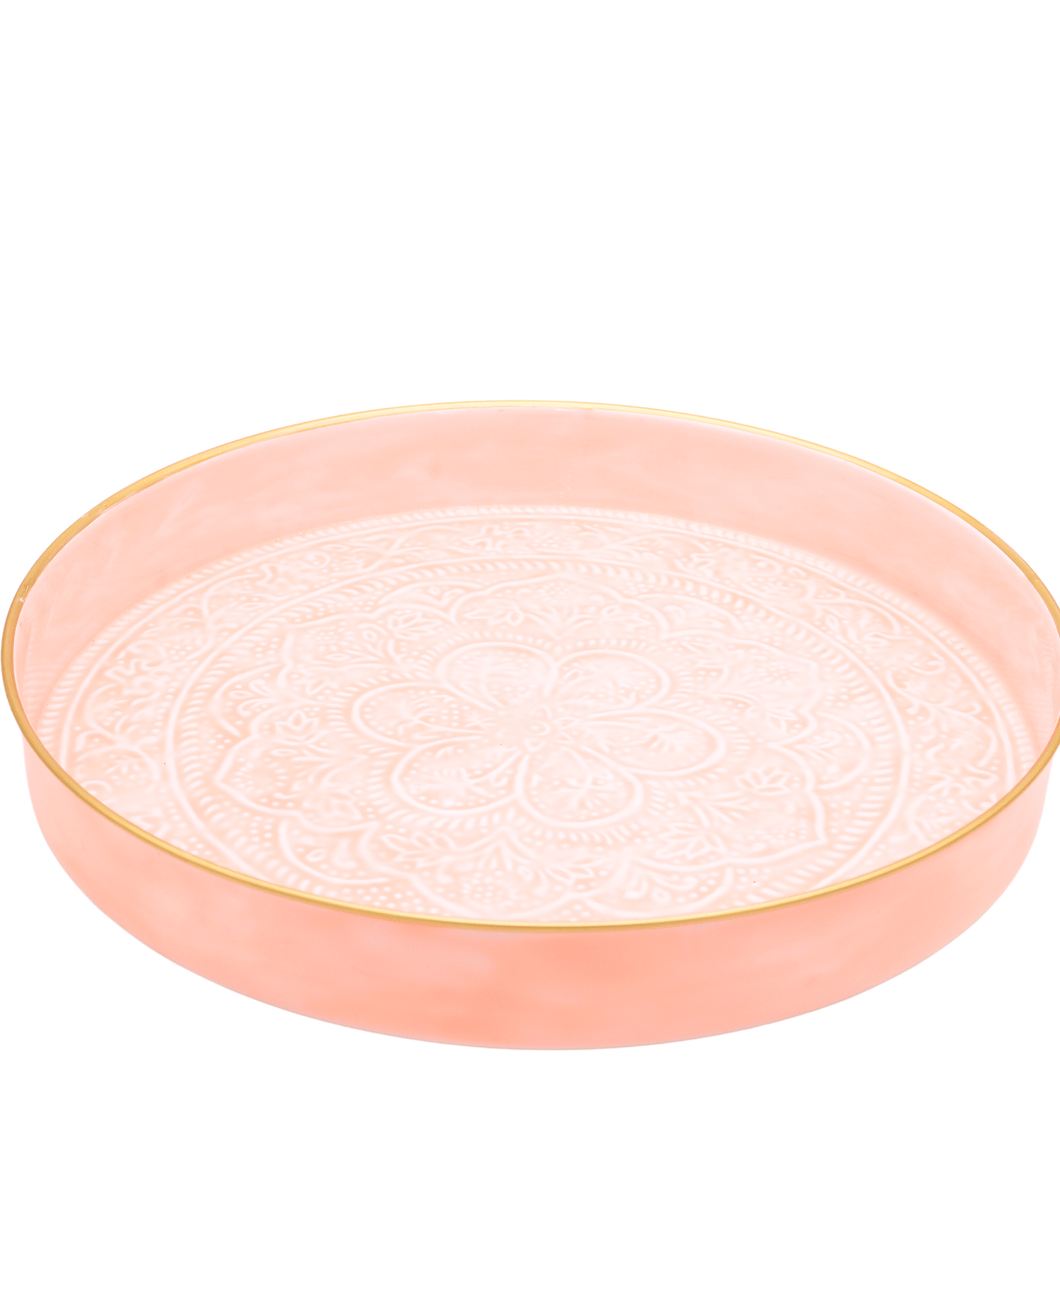 Large Round Enamel Light Pink Tray